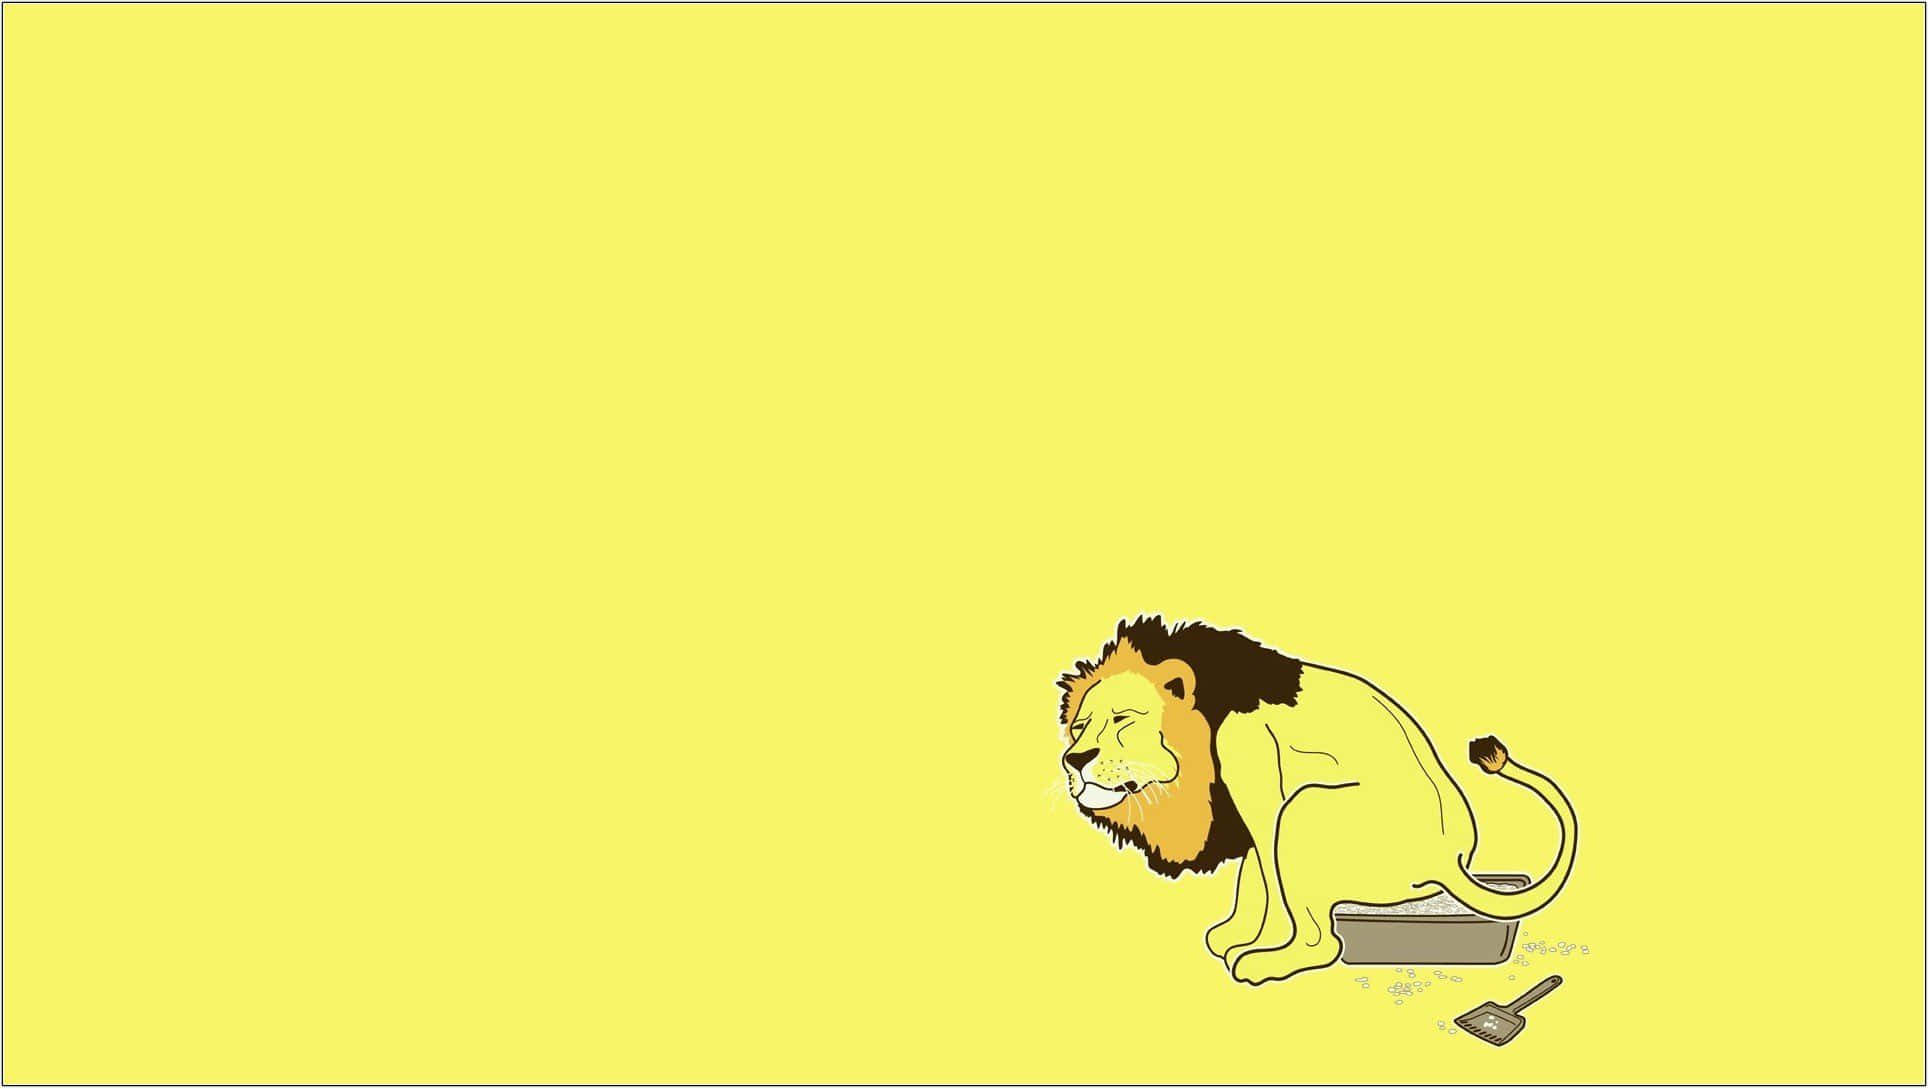 En løve sidder på en gul baggrund